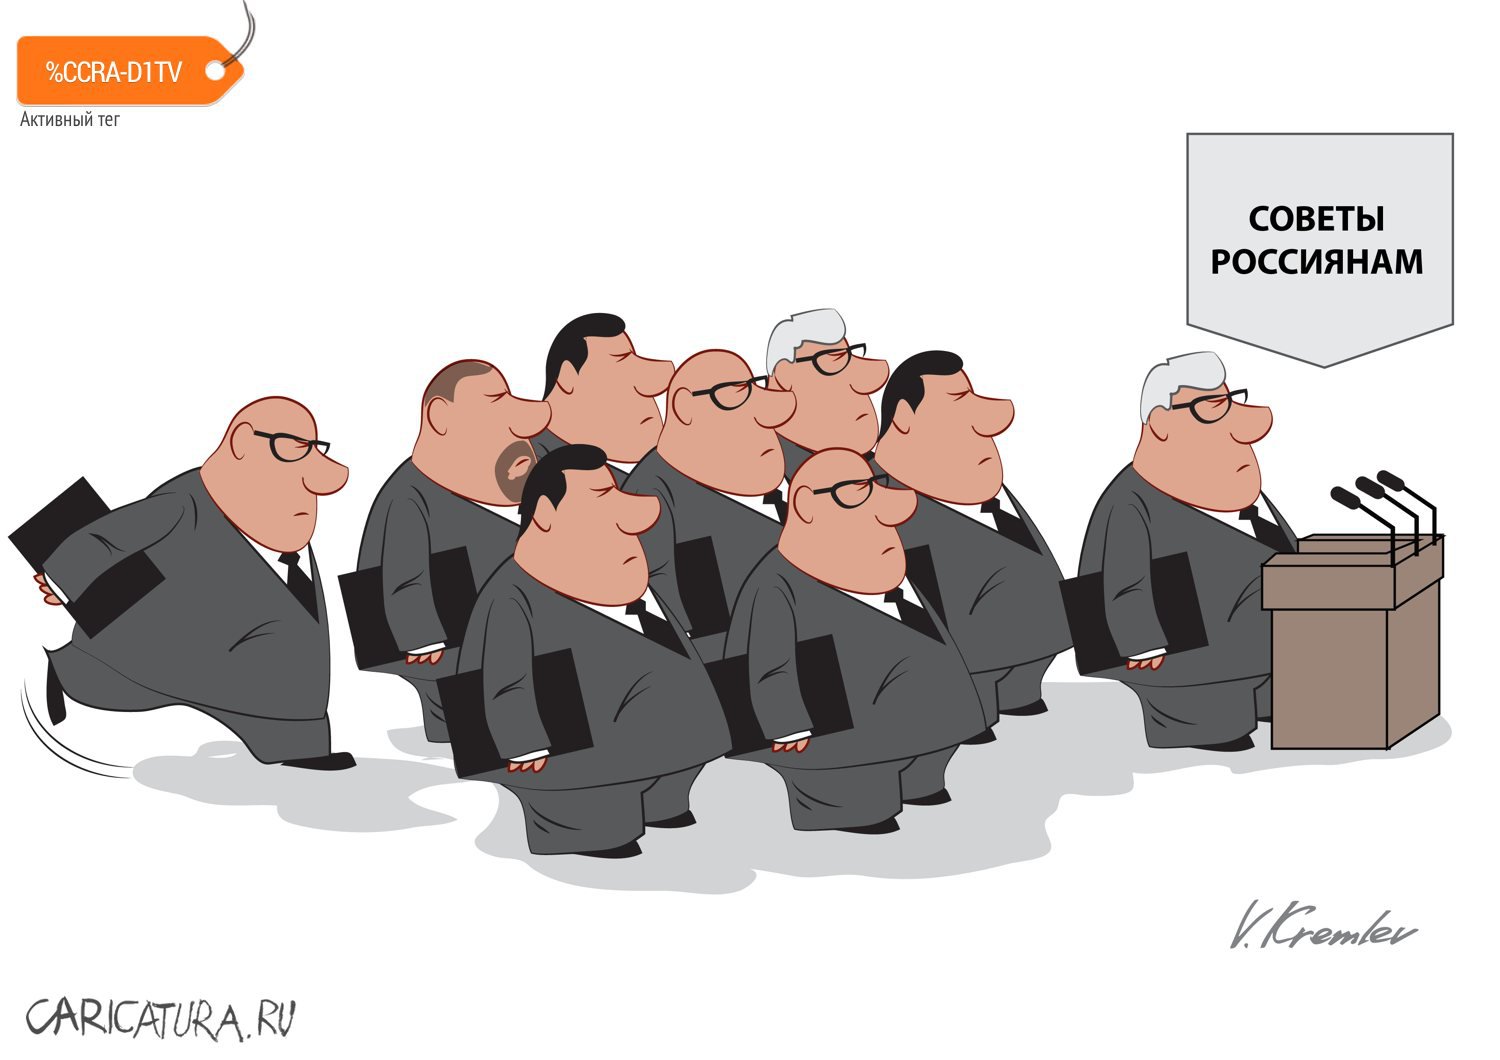 Карикатура "Забота", Владимир Кремлёв